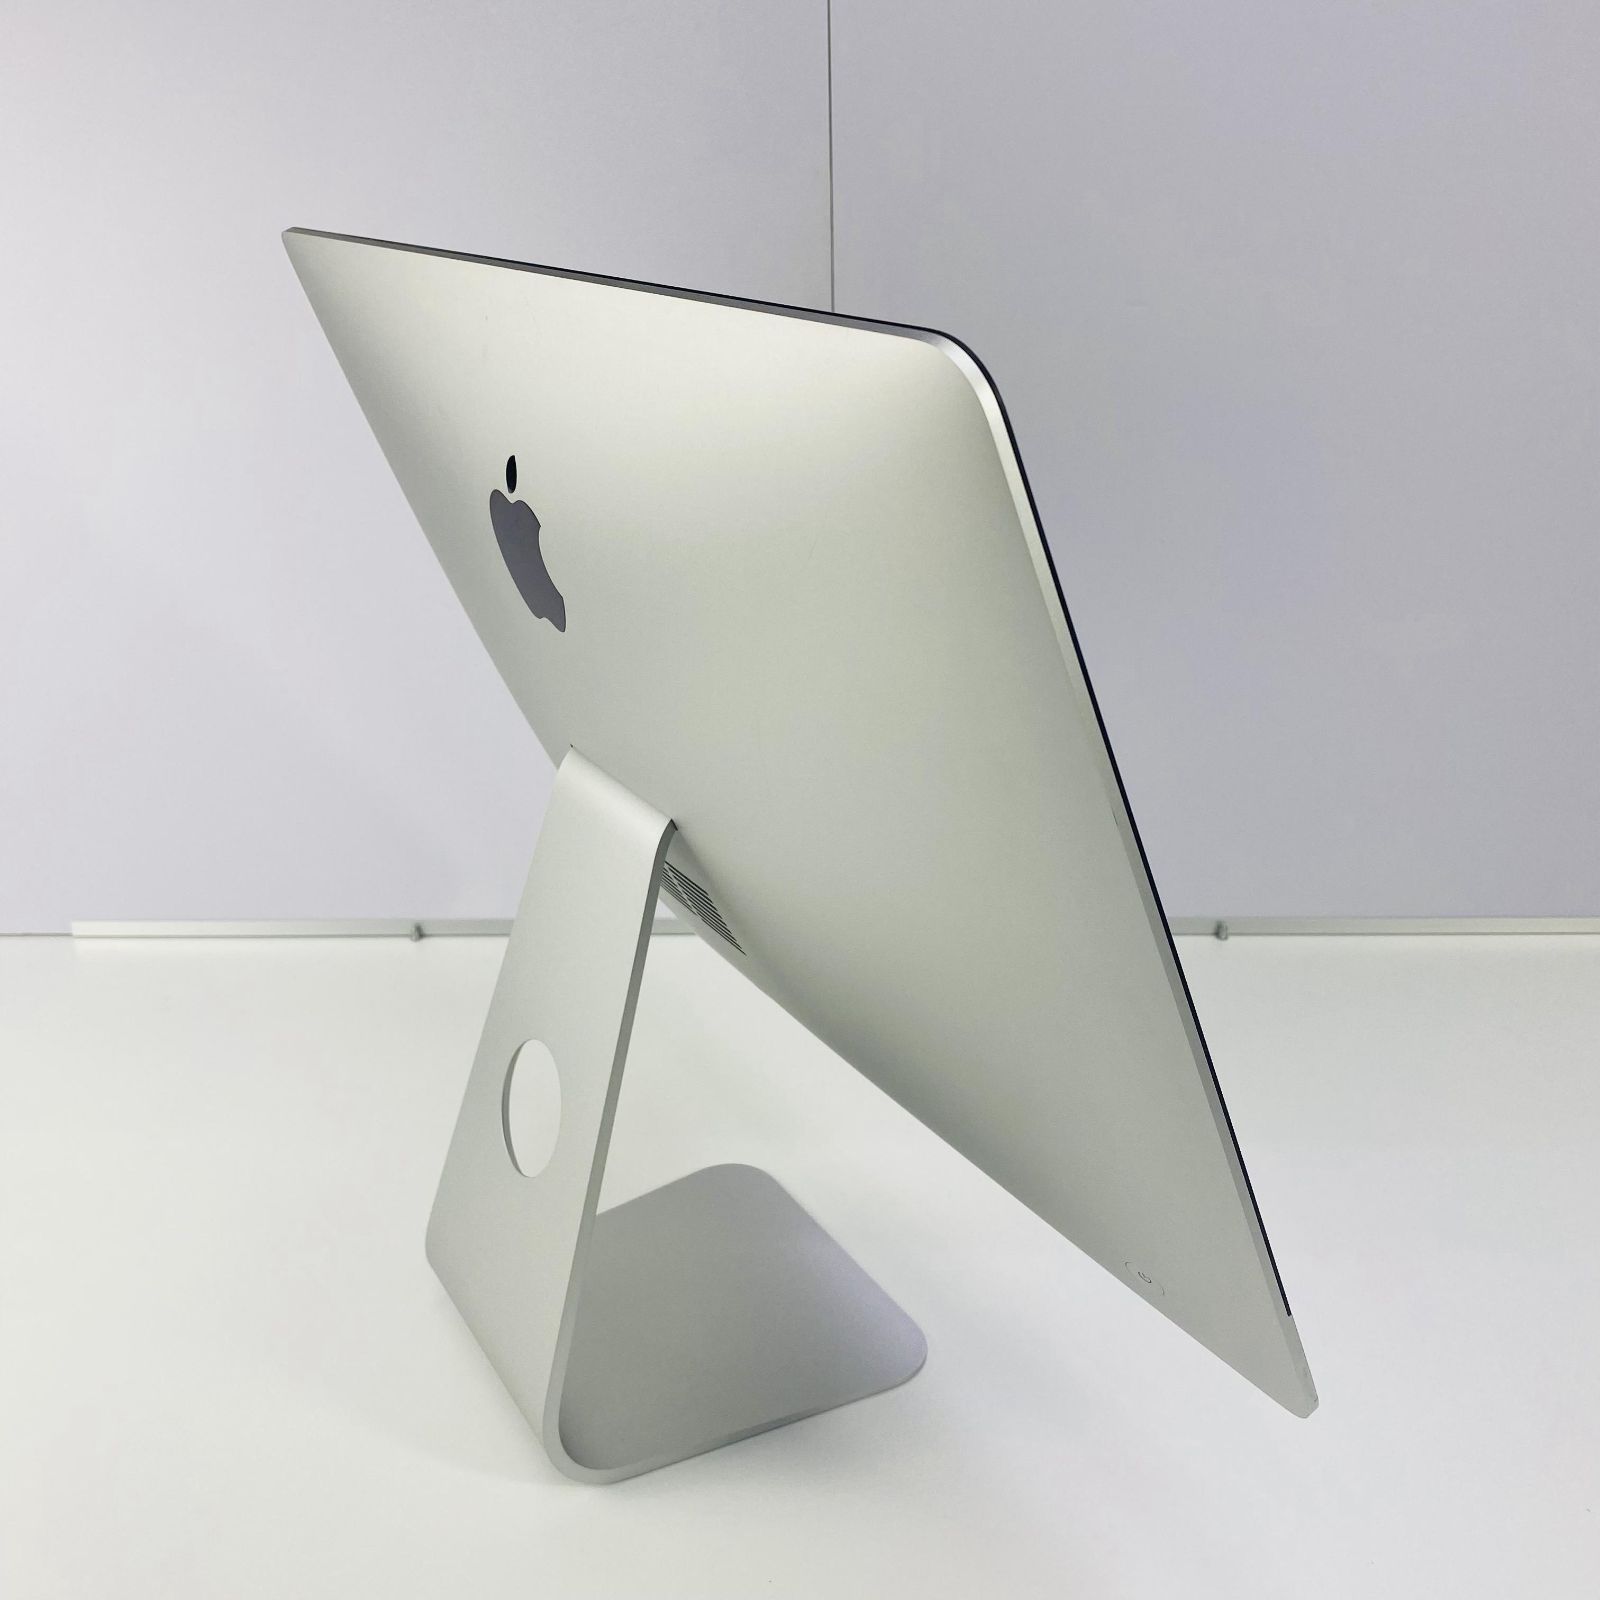 Apple iMac 21.5インチ2013/8GB/